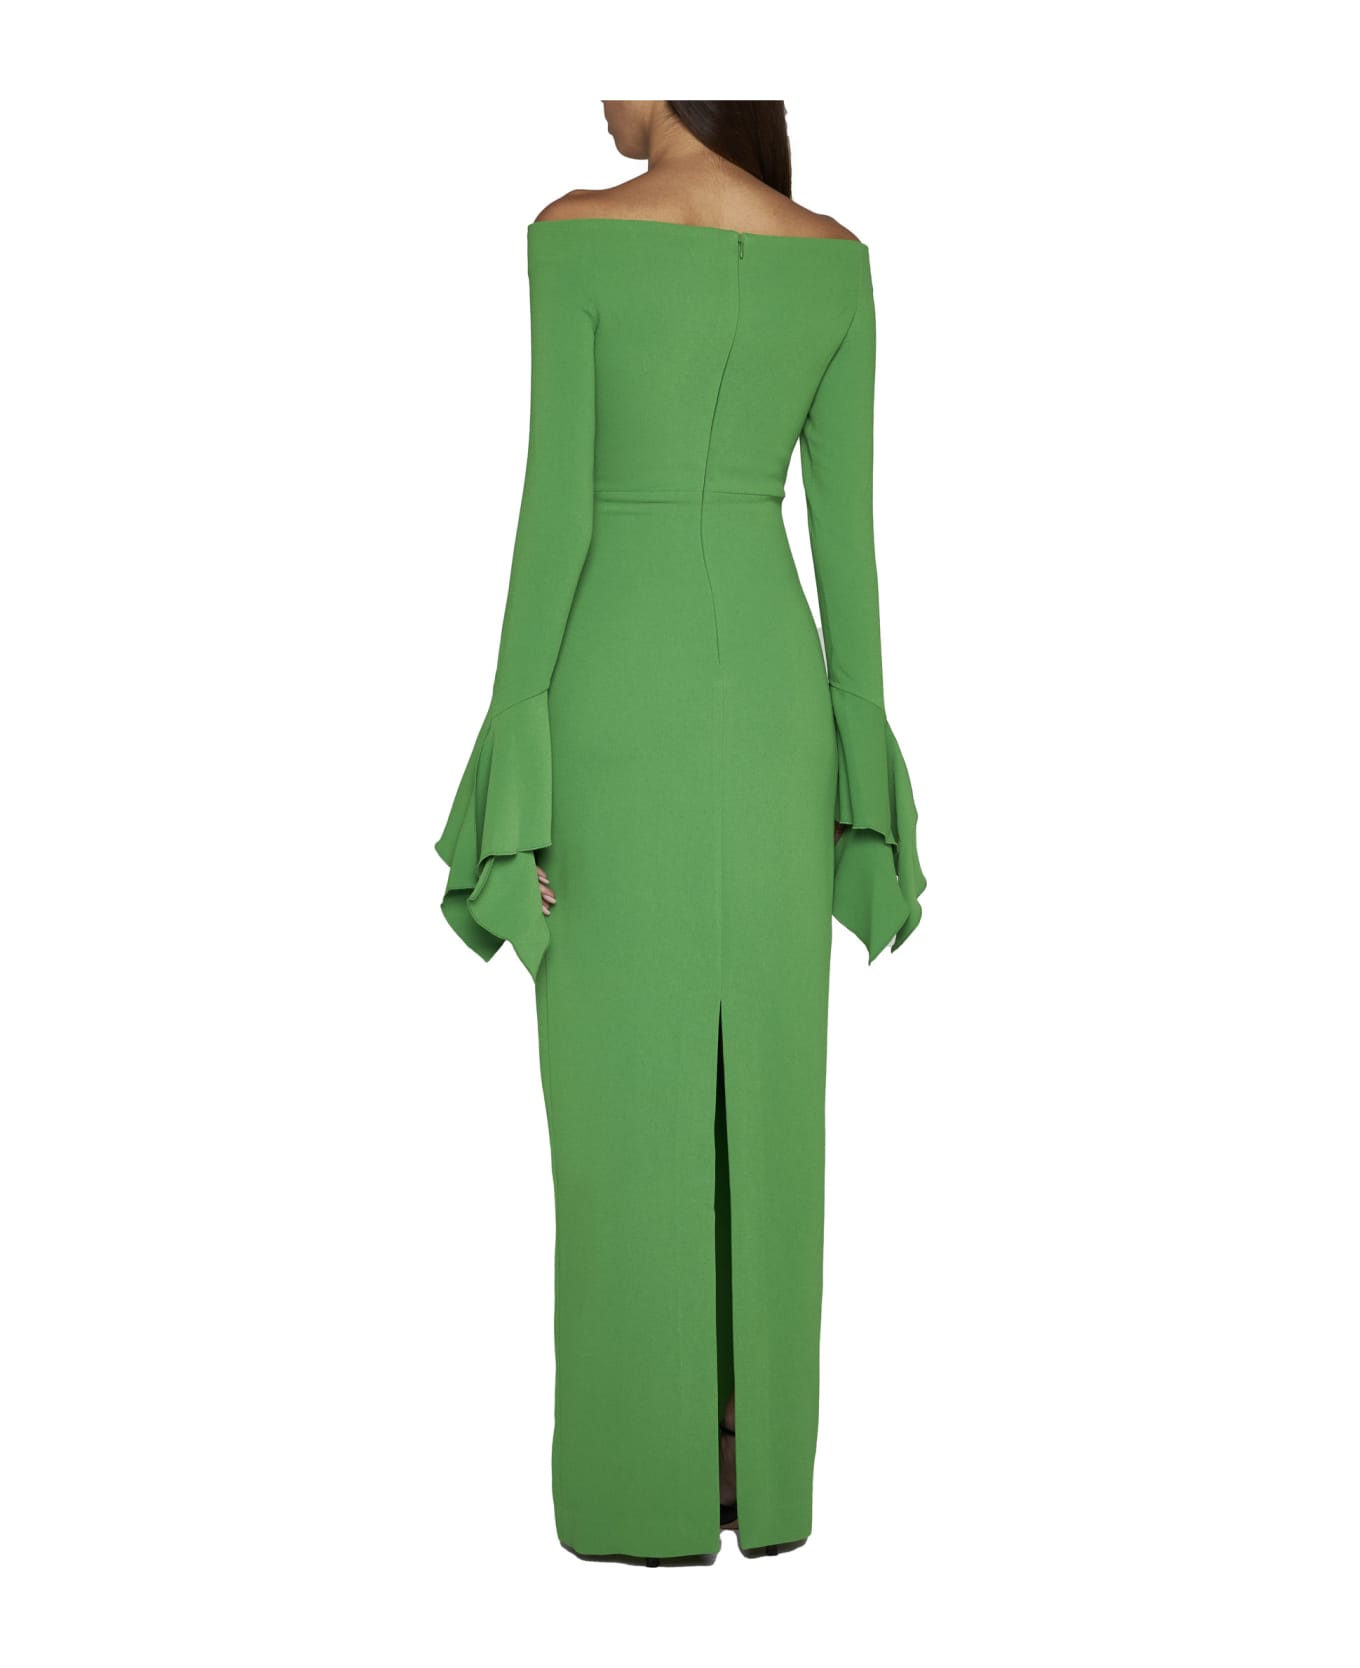 Solace London Dress - Bright green